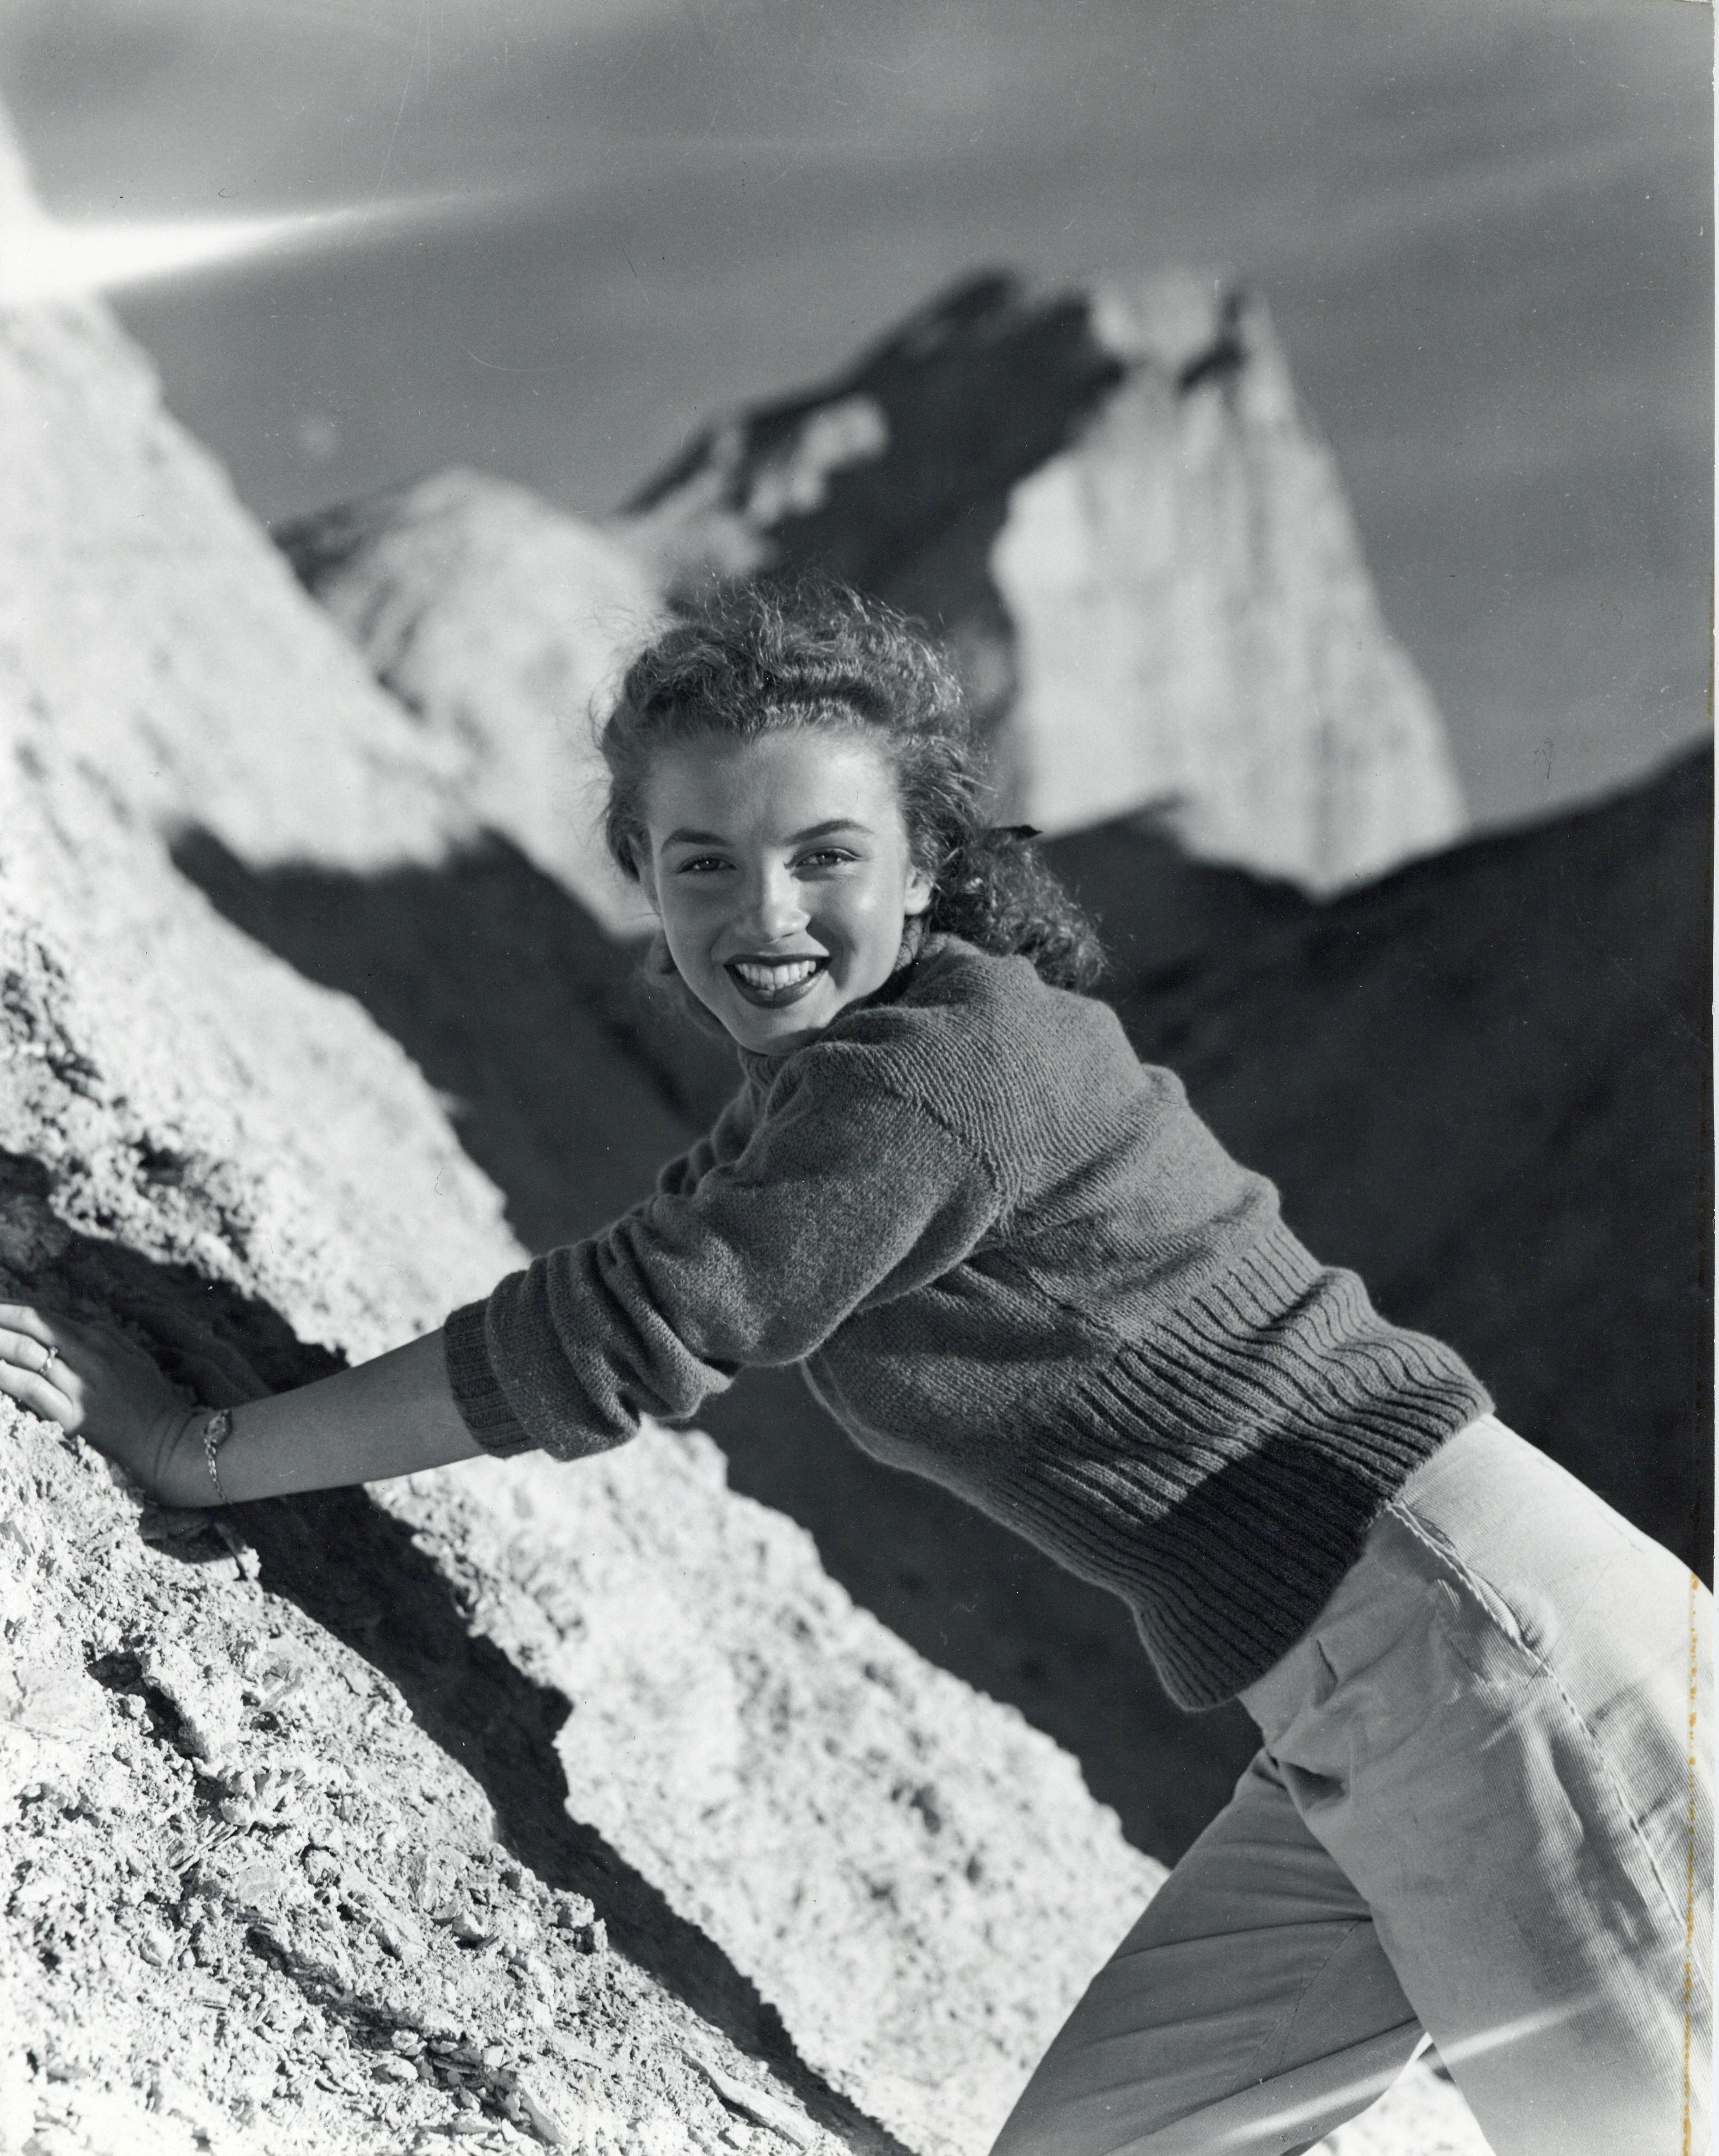 Andre de Dienes Portrait Photograph - Marilyn Monroe 'Norma Jeane' Posing on Mountain Vintage Original Photograph